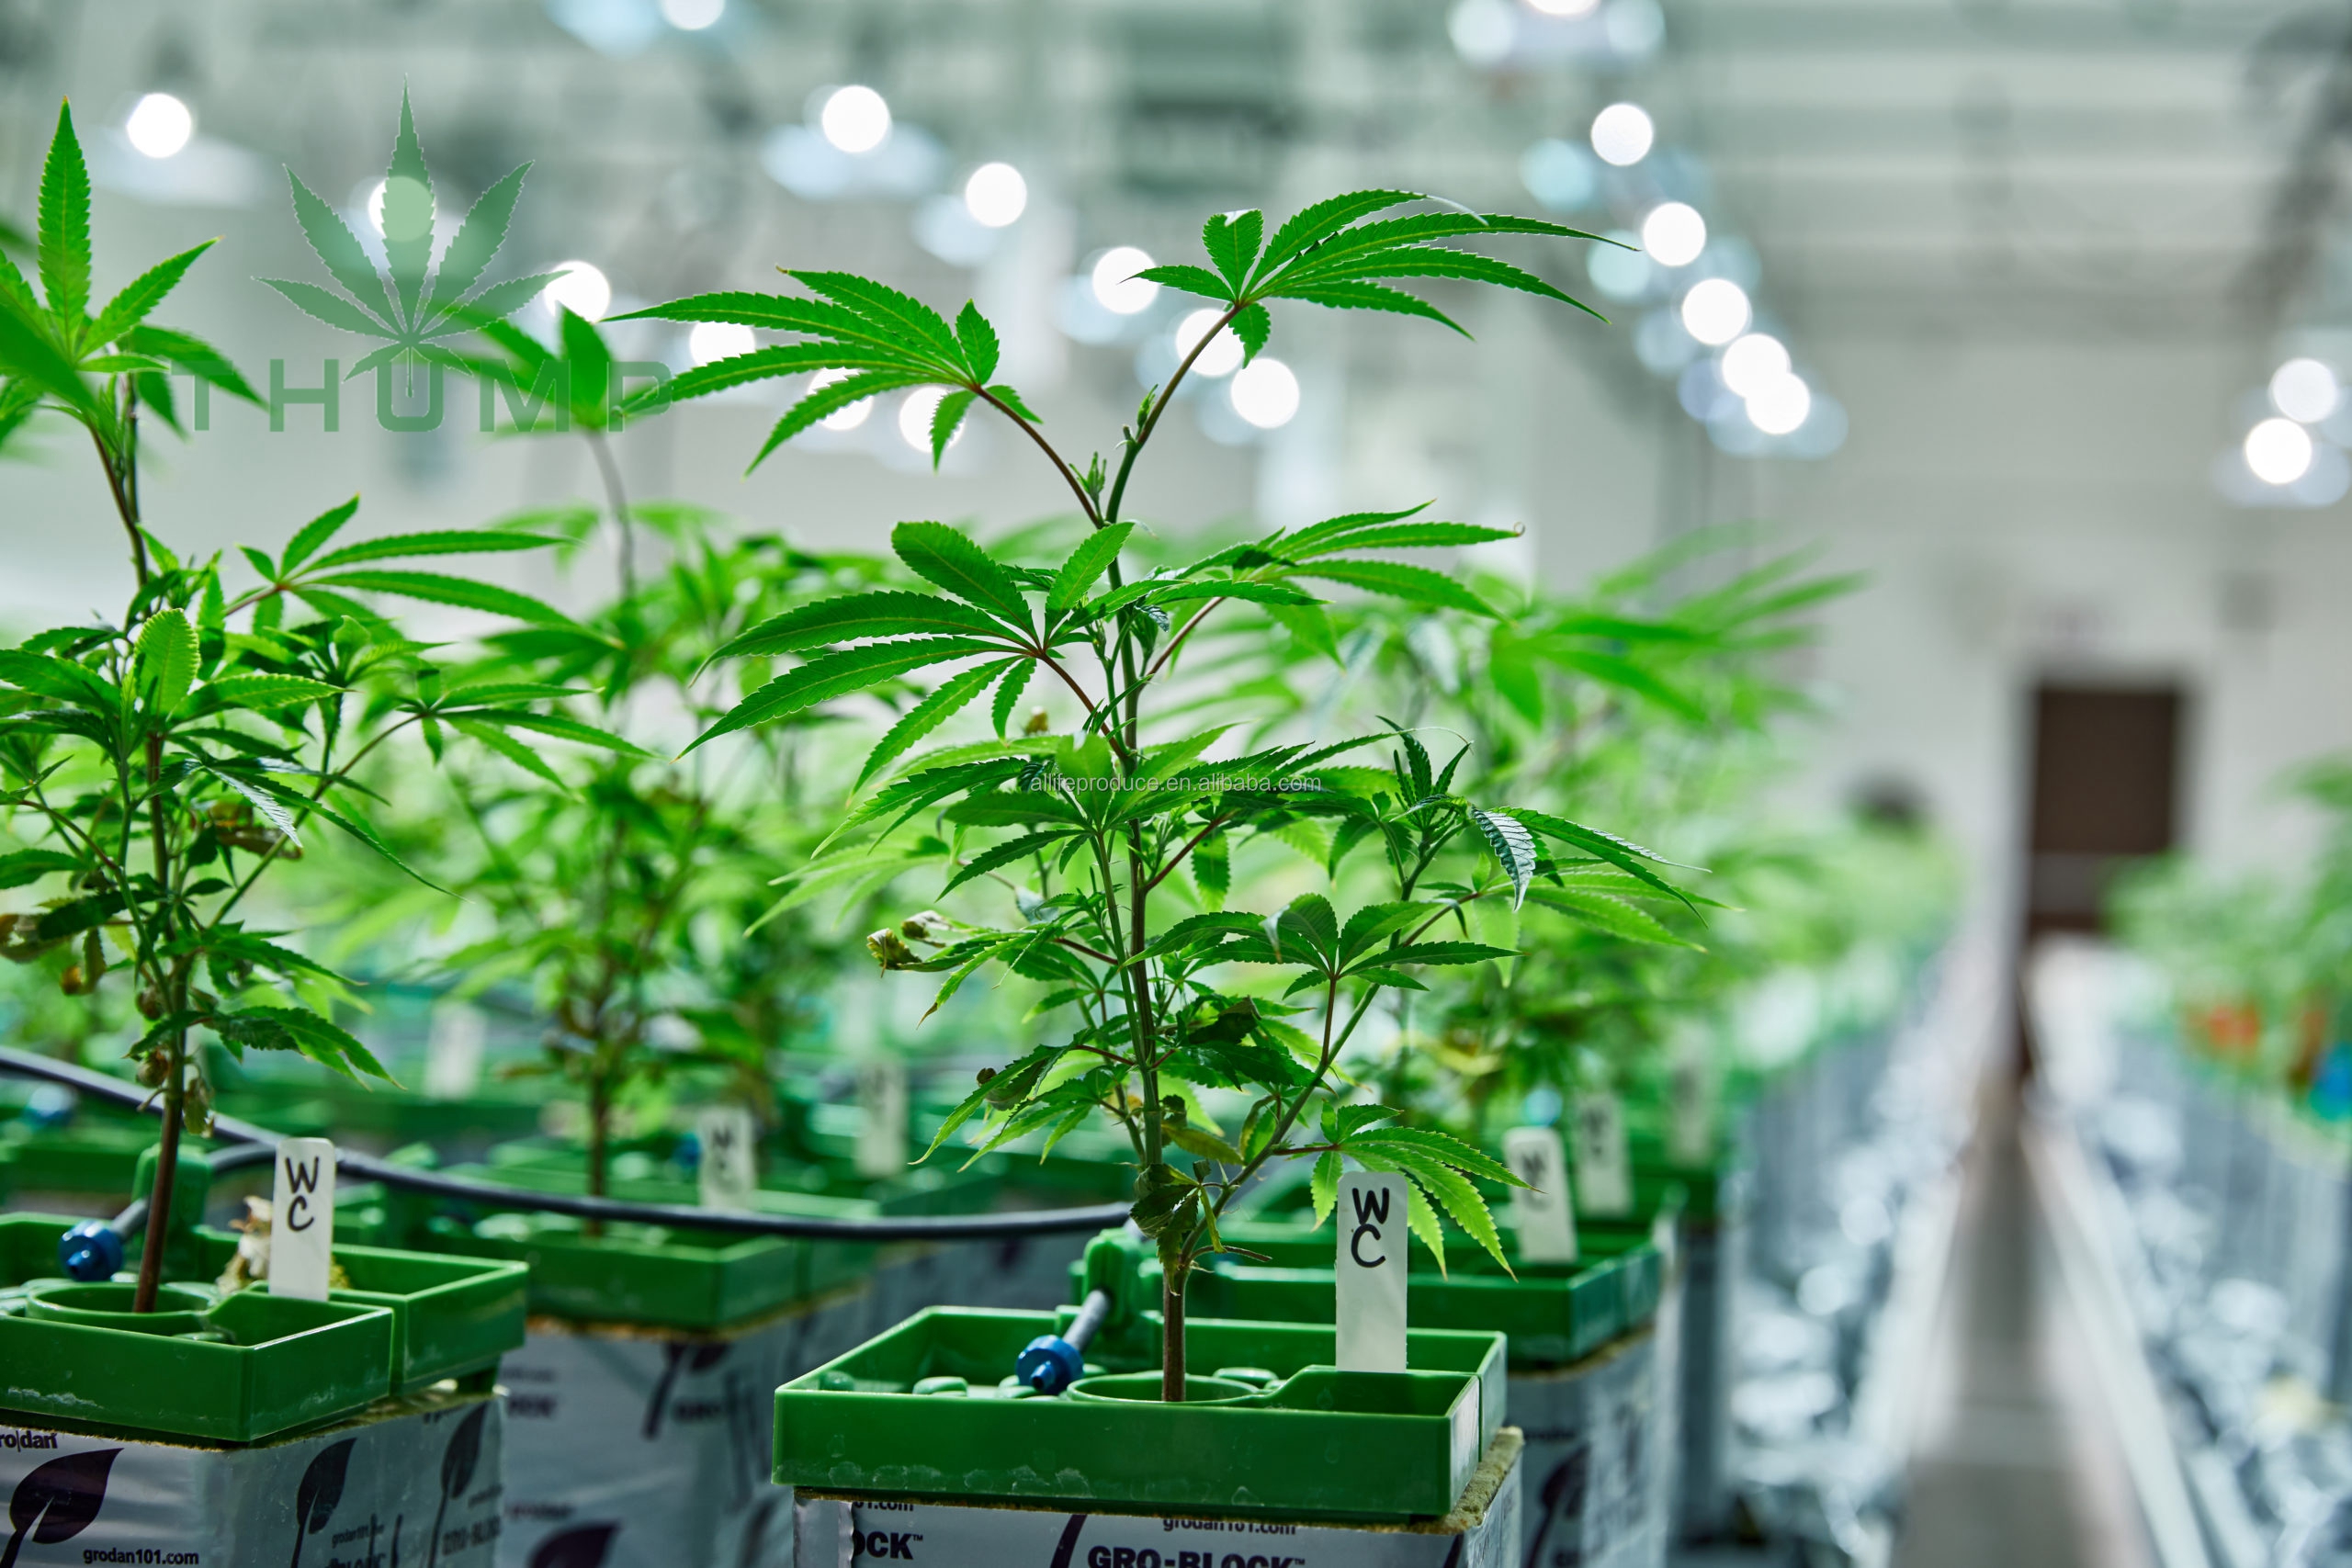 How to obtain permission to grow medical marijuana?